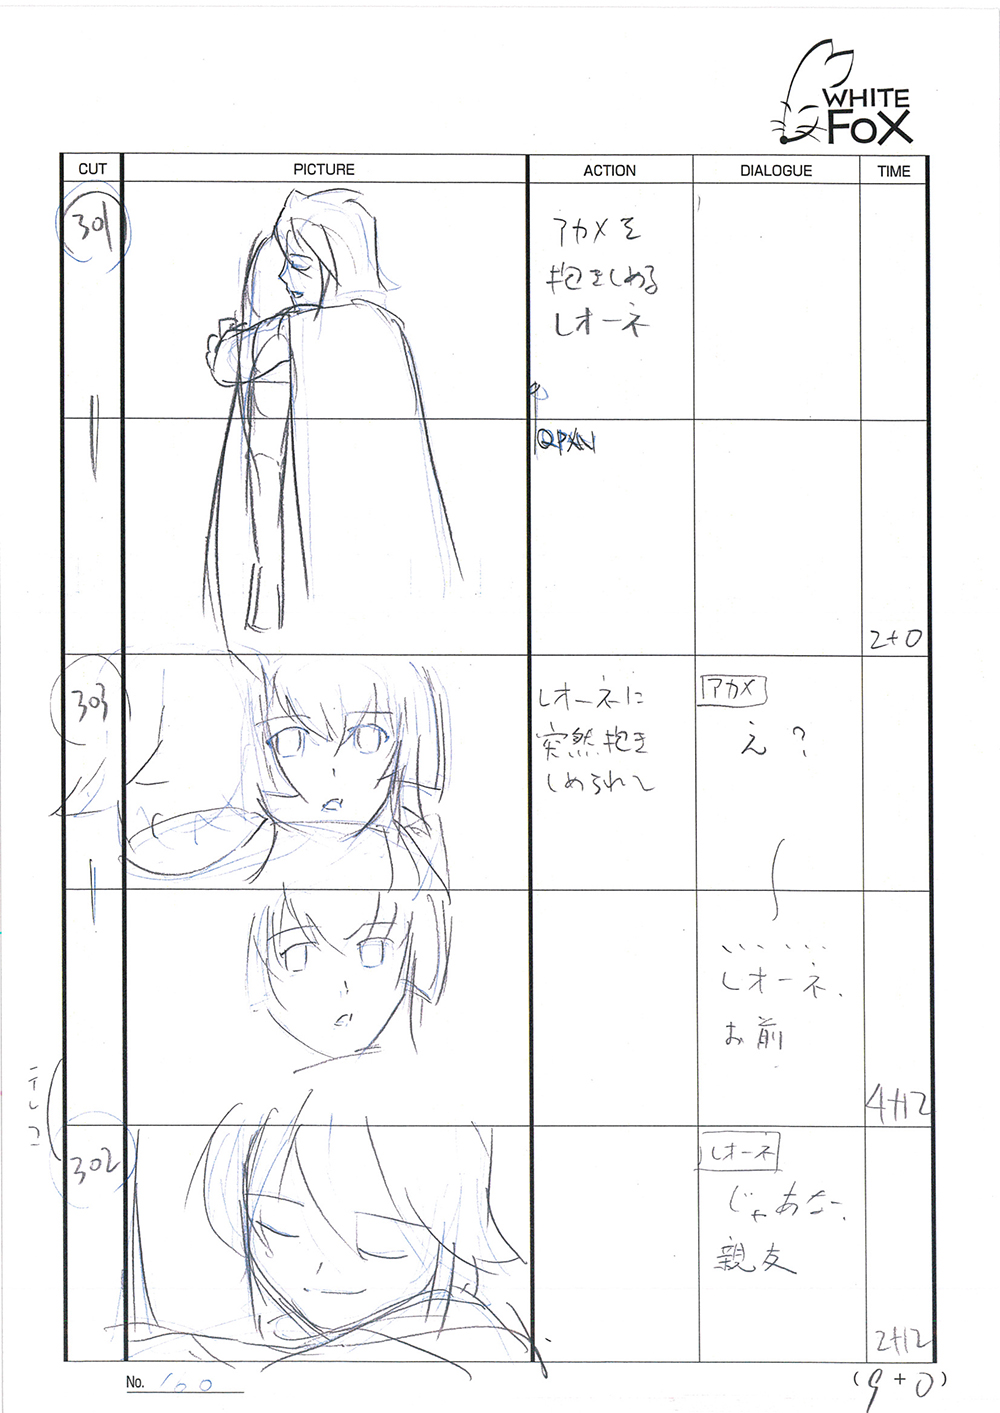 Akame ga Kill Episode 24 Storyboard Leak 165